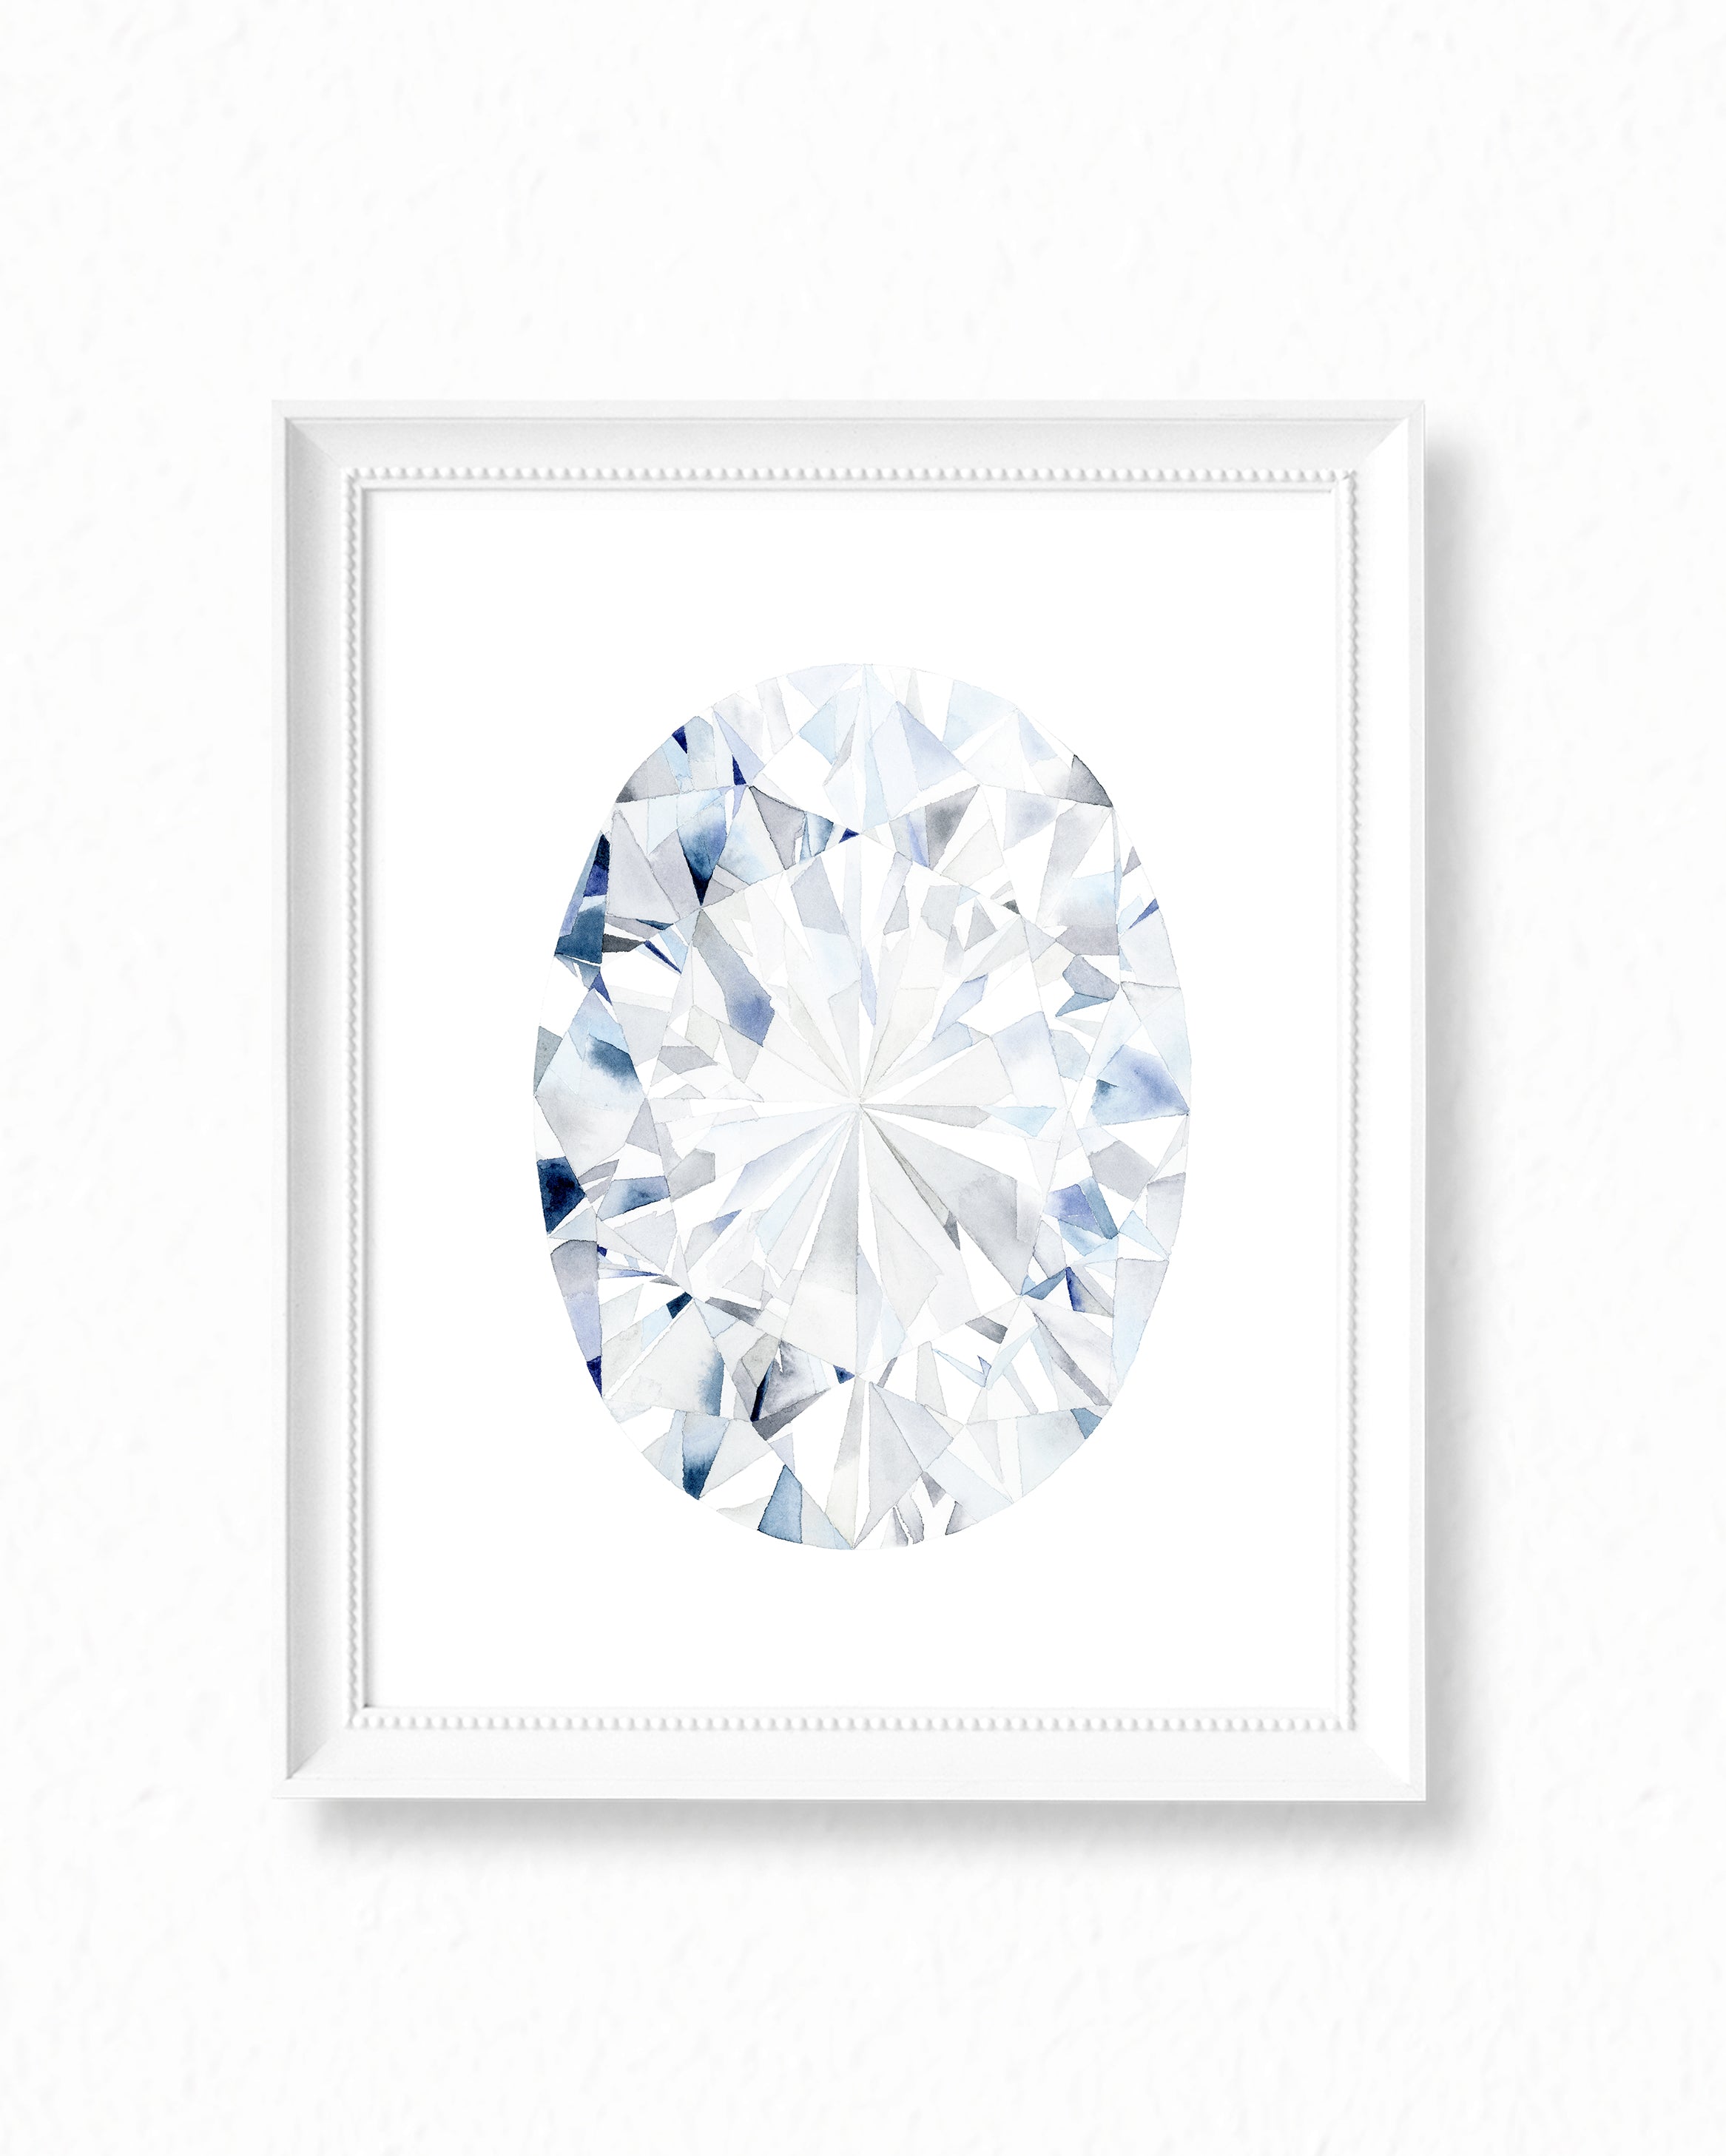 Watercolor Diamond Painting - Oval Diamond Cut - Art Print